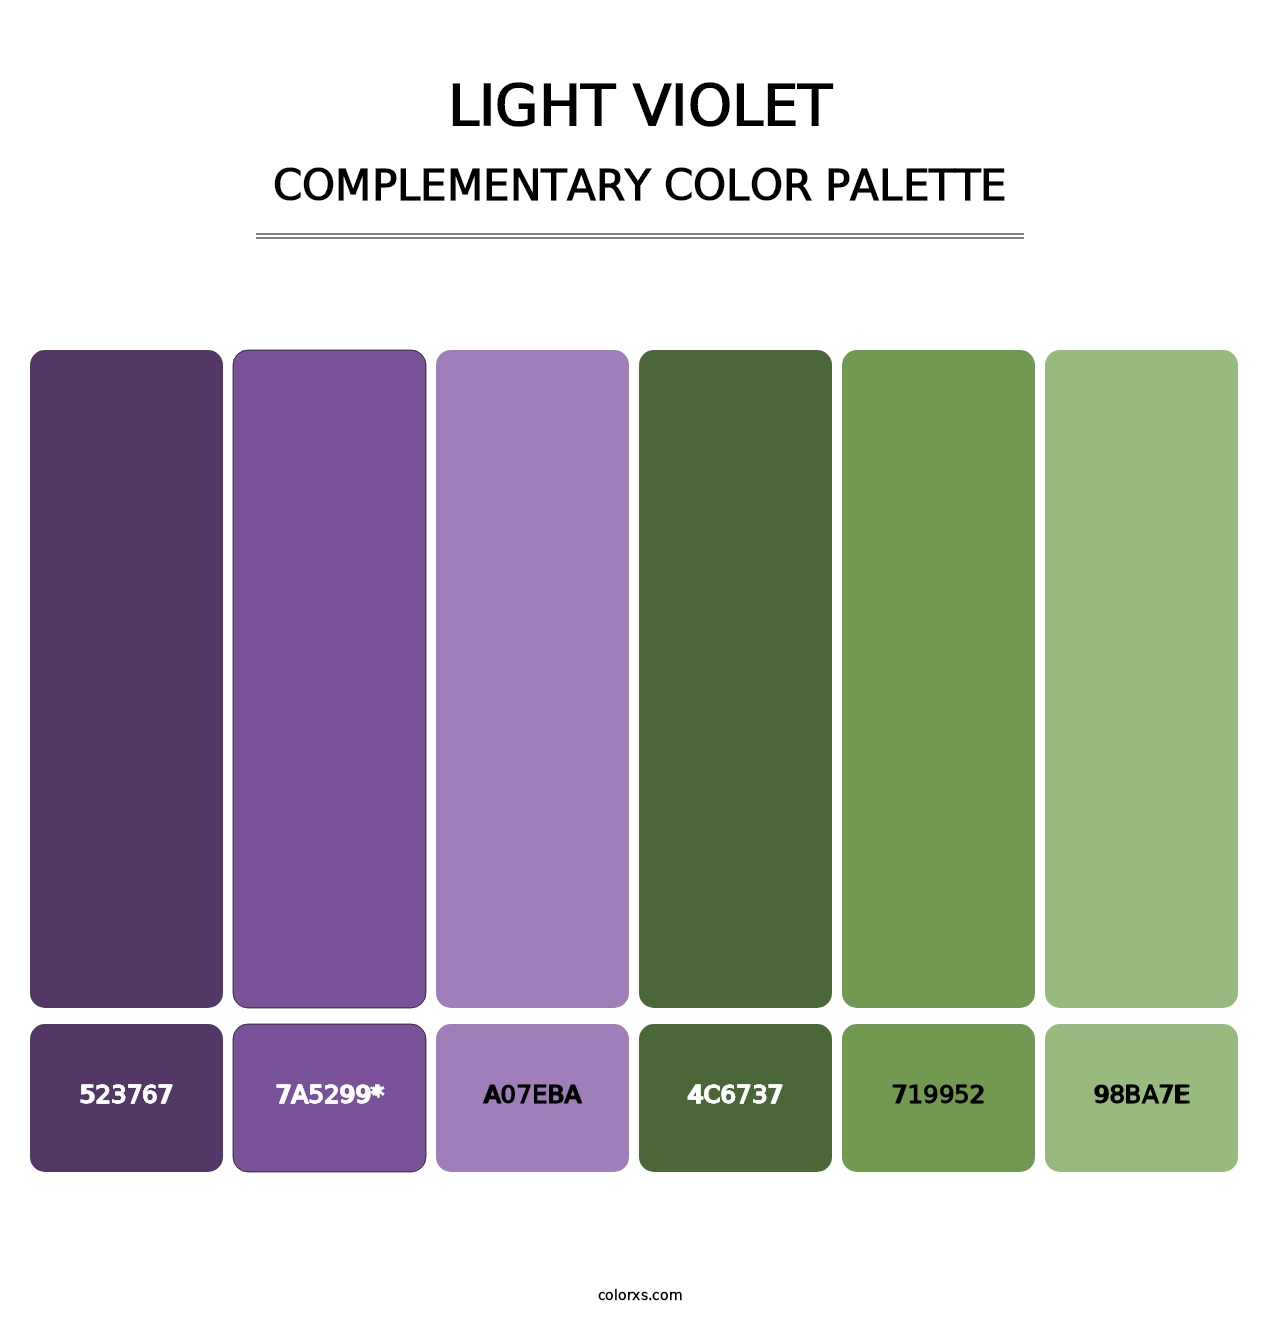 Light Violet - Complementary Color Palette